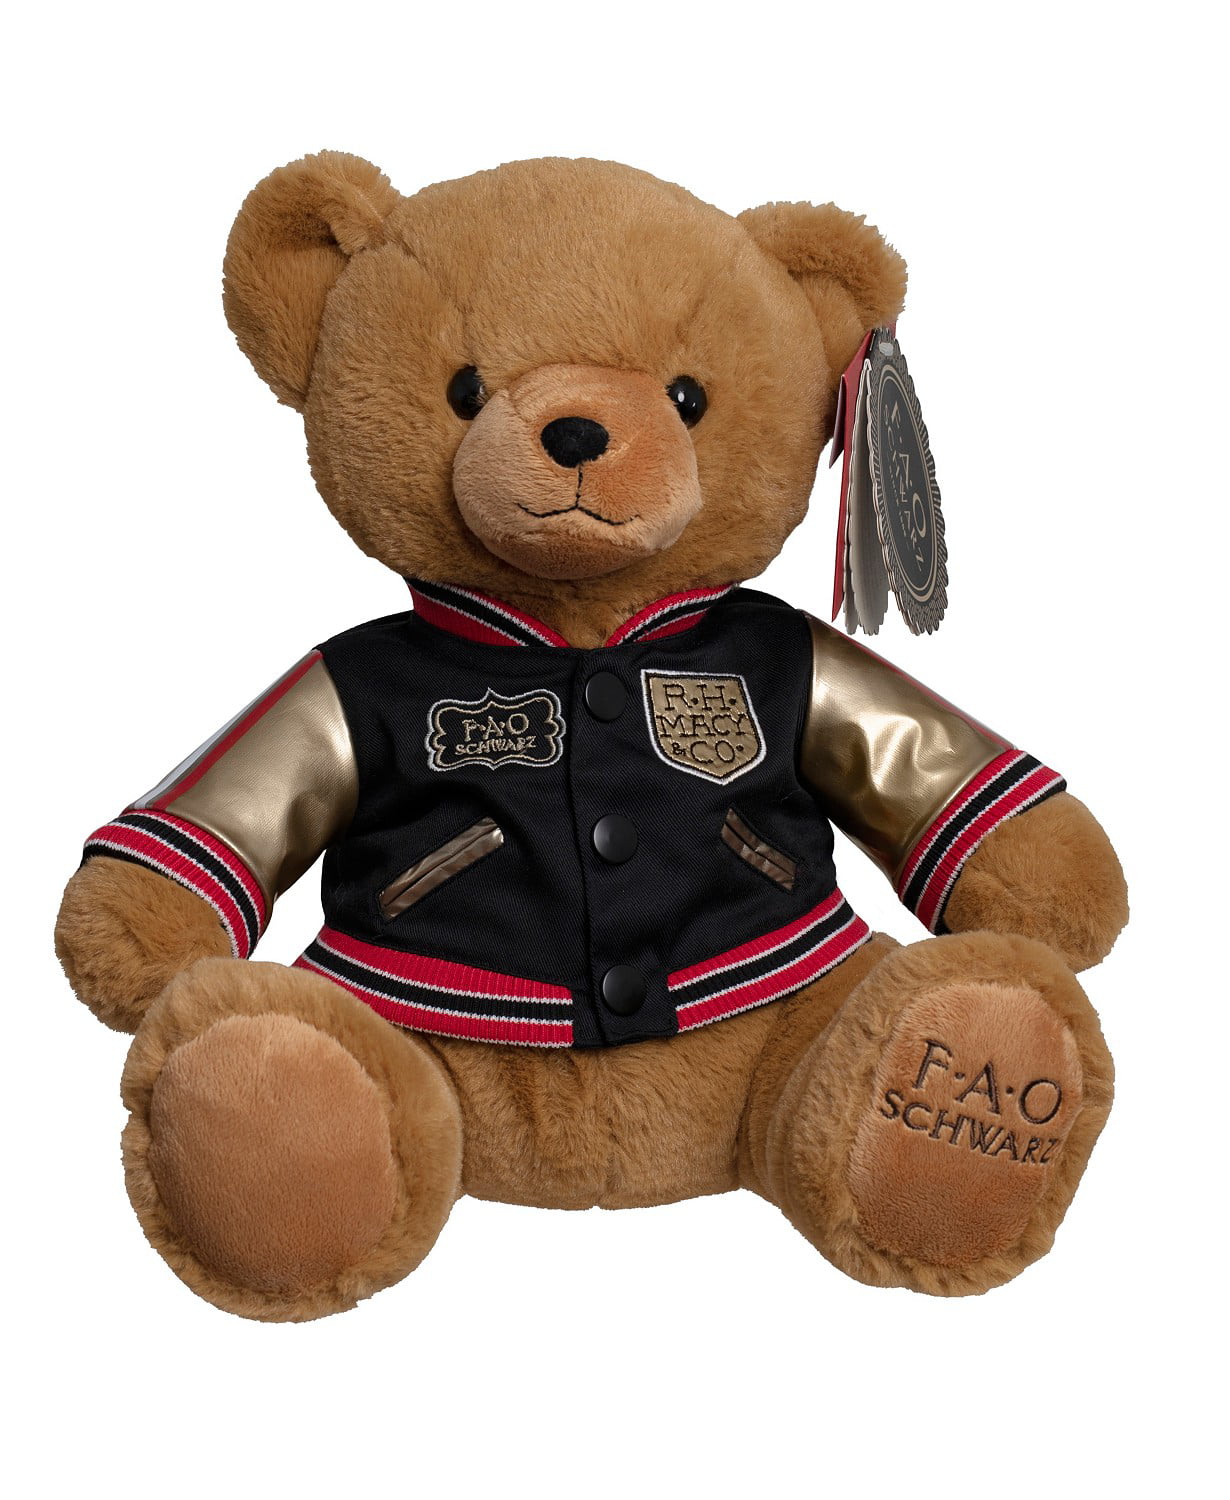 FAO Schwarz Toy Plush Anniversary Bear 12inch with Aviation Jacket 2019 